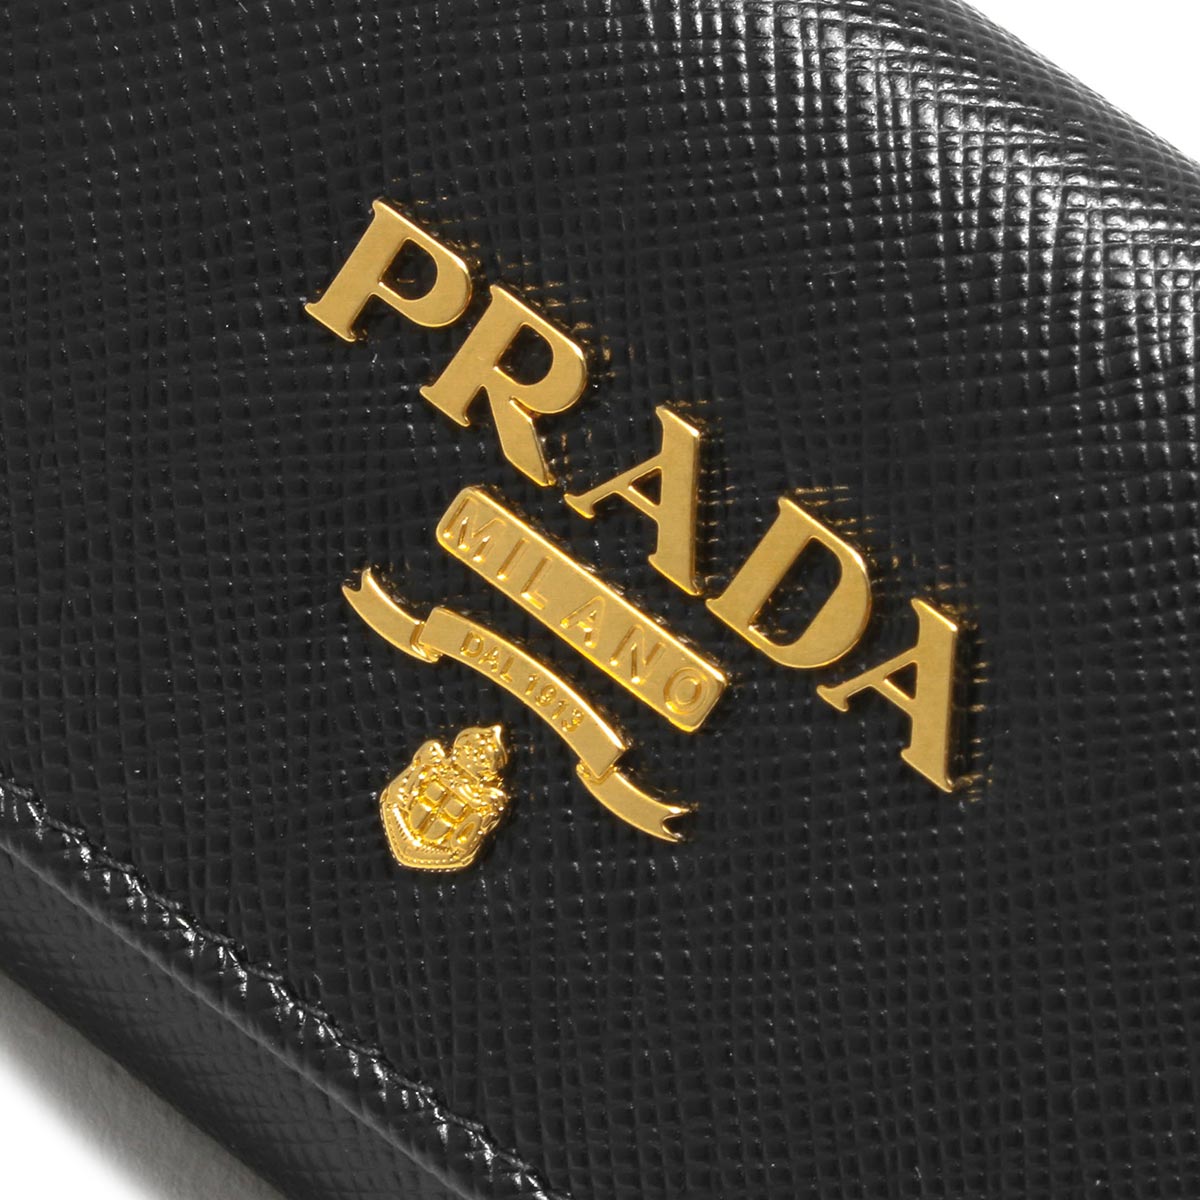 PRADA 【ポイント5倍】プラダ キーケース レディース サフィアーノ メタル ブラック 1PG004 QWA F0002 PRADA 